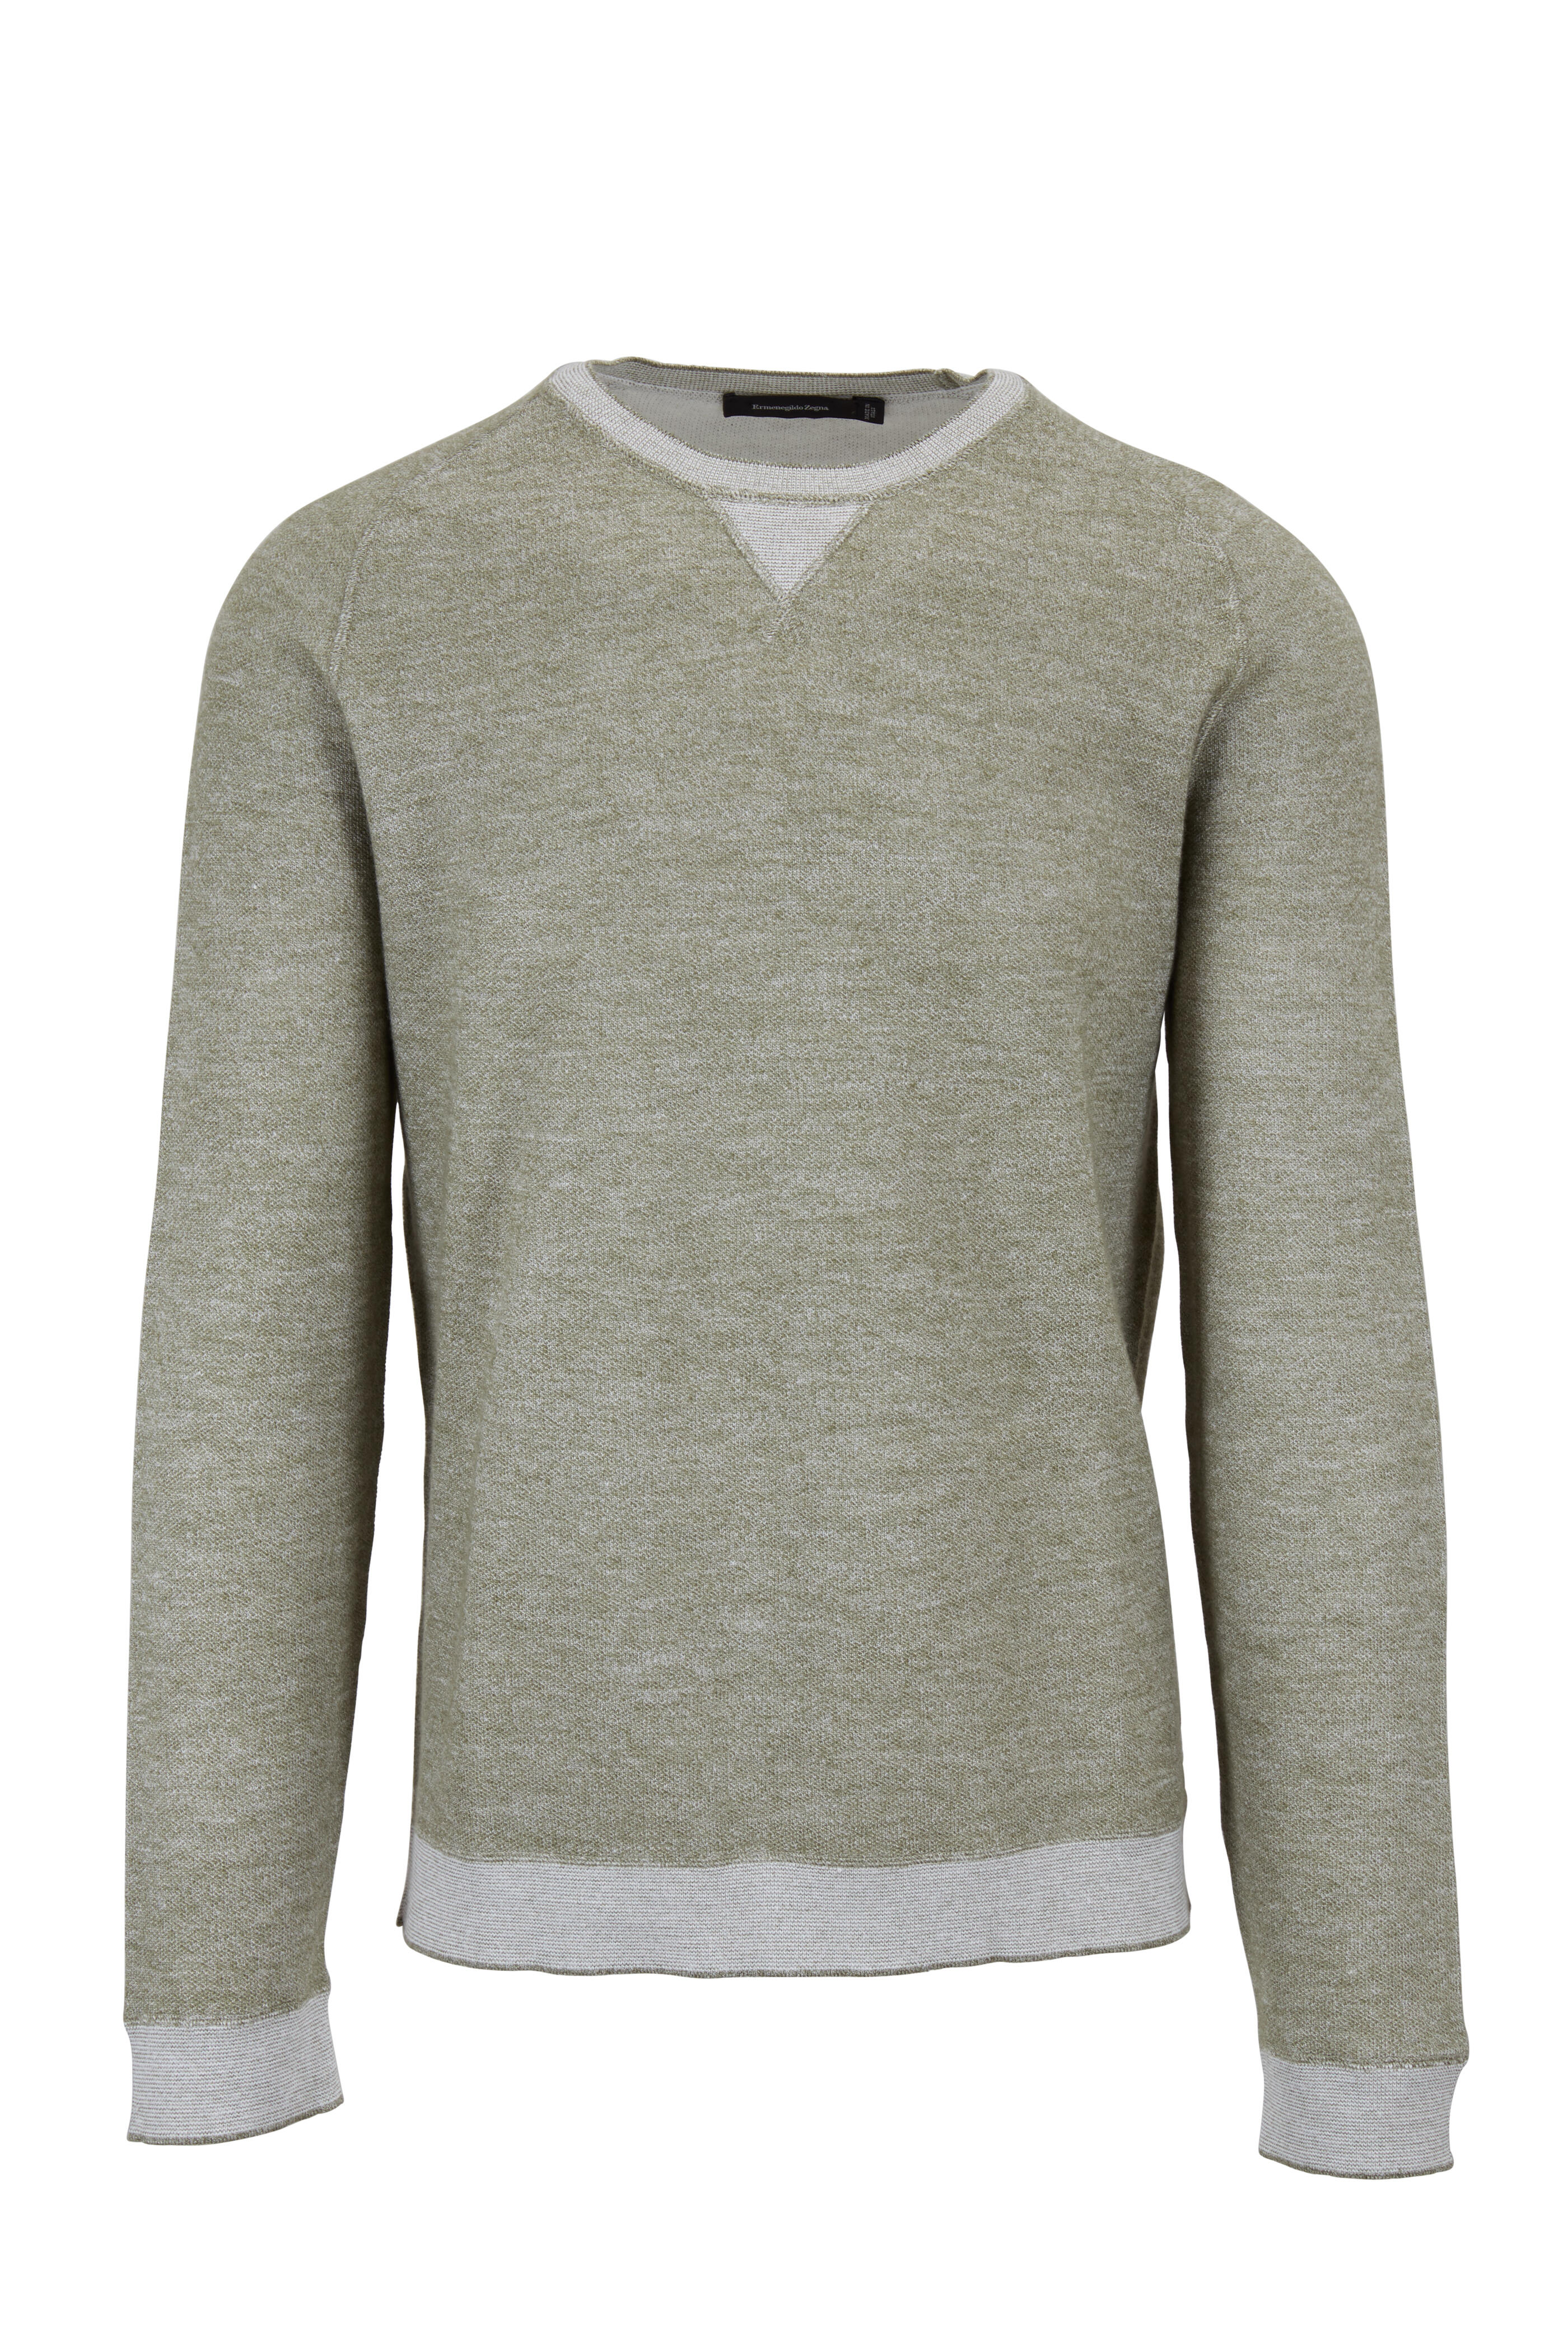 Zegna - Olive Cashmere Blend Crewneck Sweater | Mitchell Stores